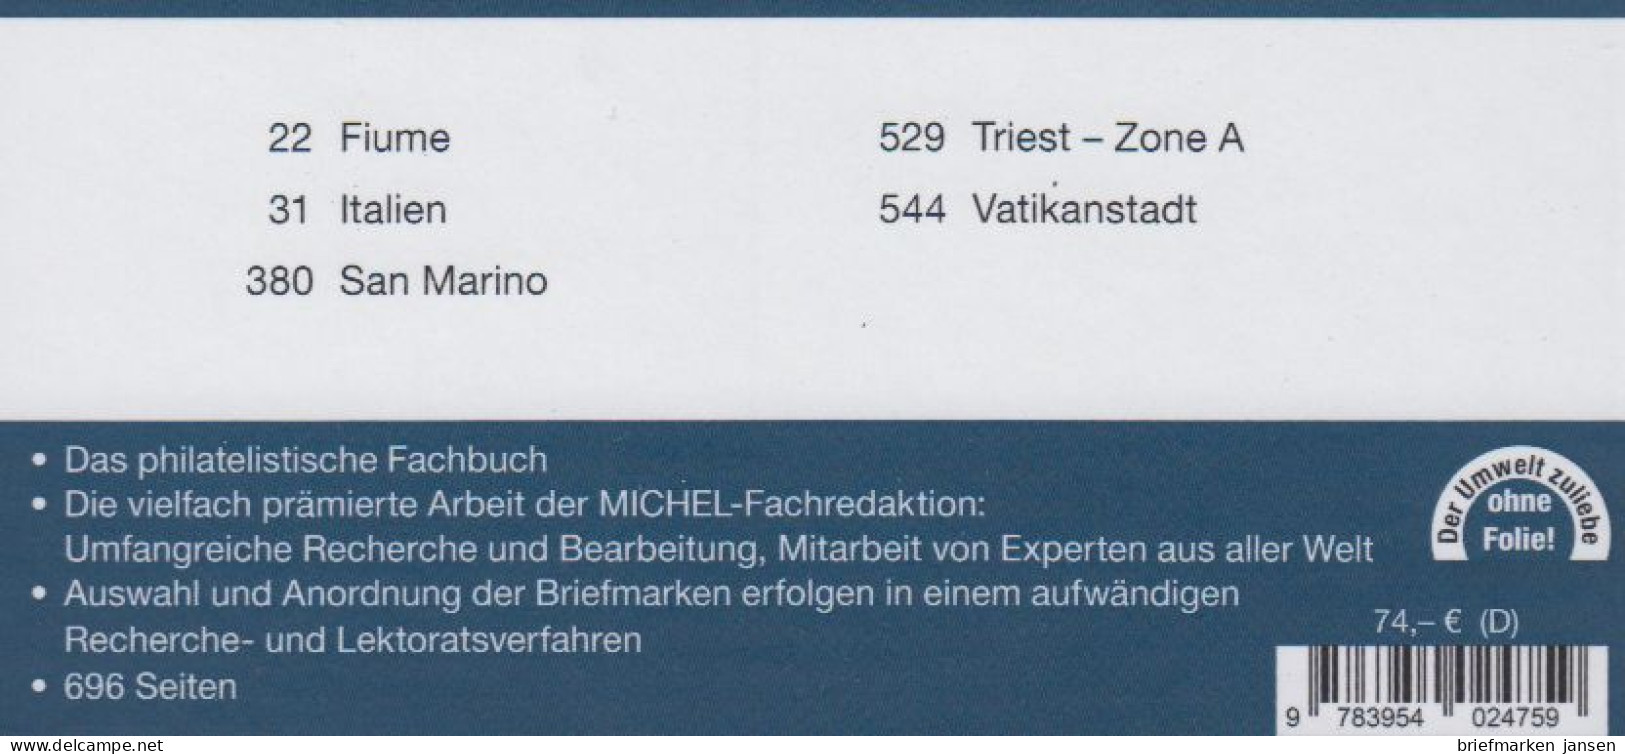 Michel Europa Katalog Band 5 - Apenninen-Halbinsel 2024, 109. Auflage - Autriche